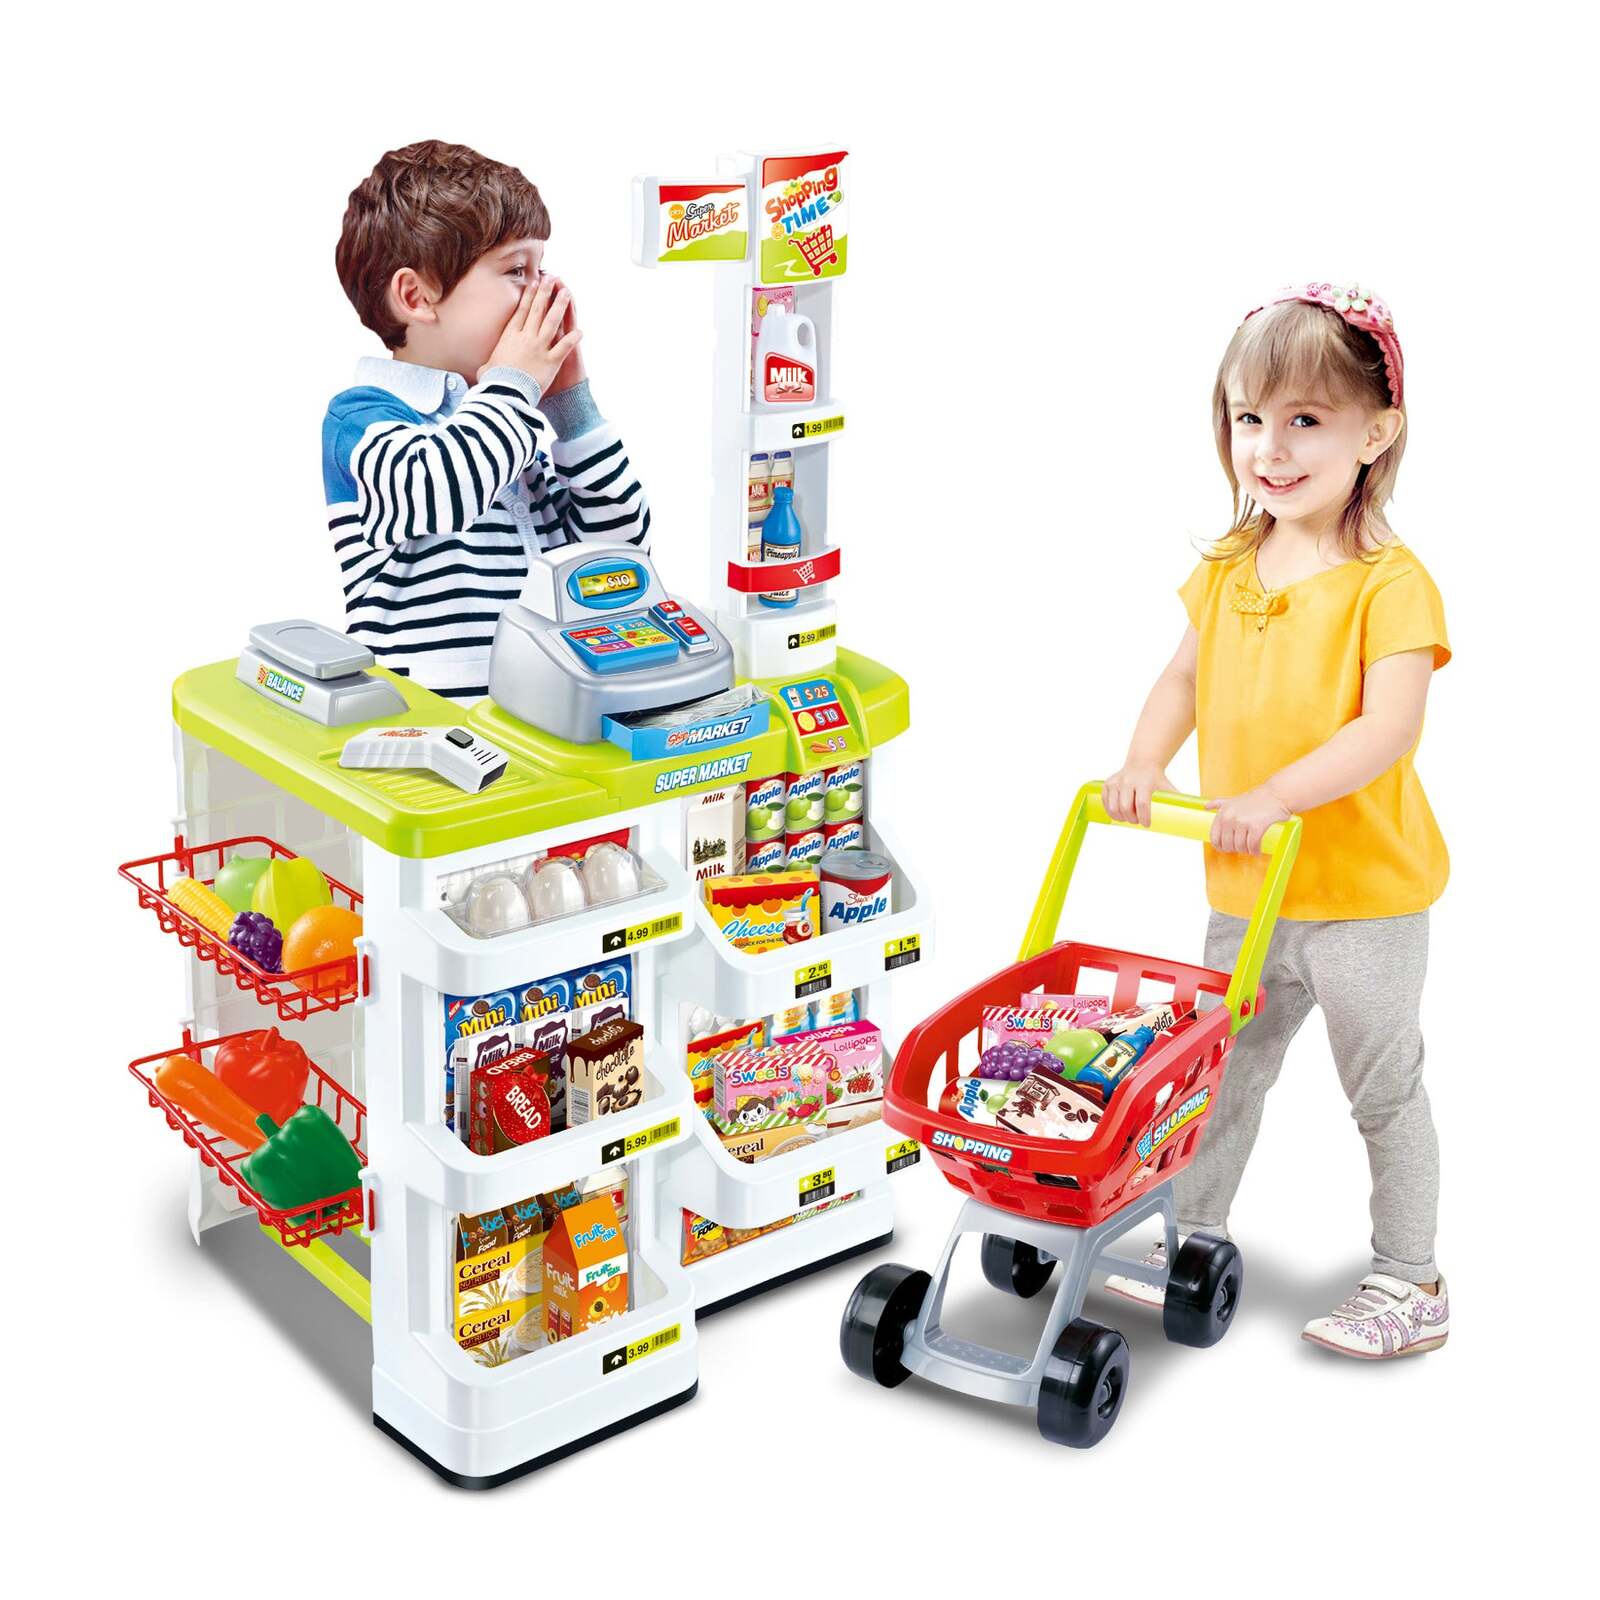 Shop Kids Supermarket Toy with Cash Register, Trolley, Food